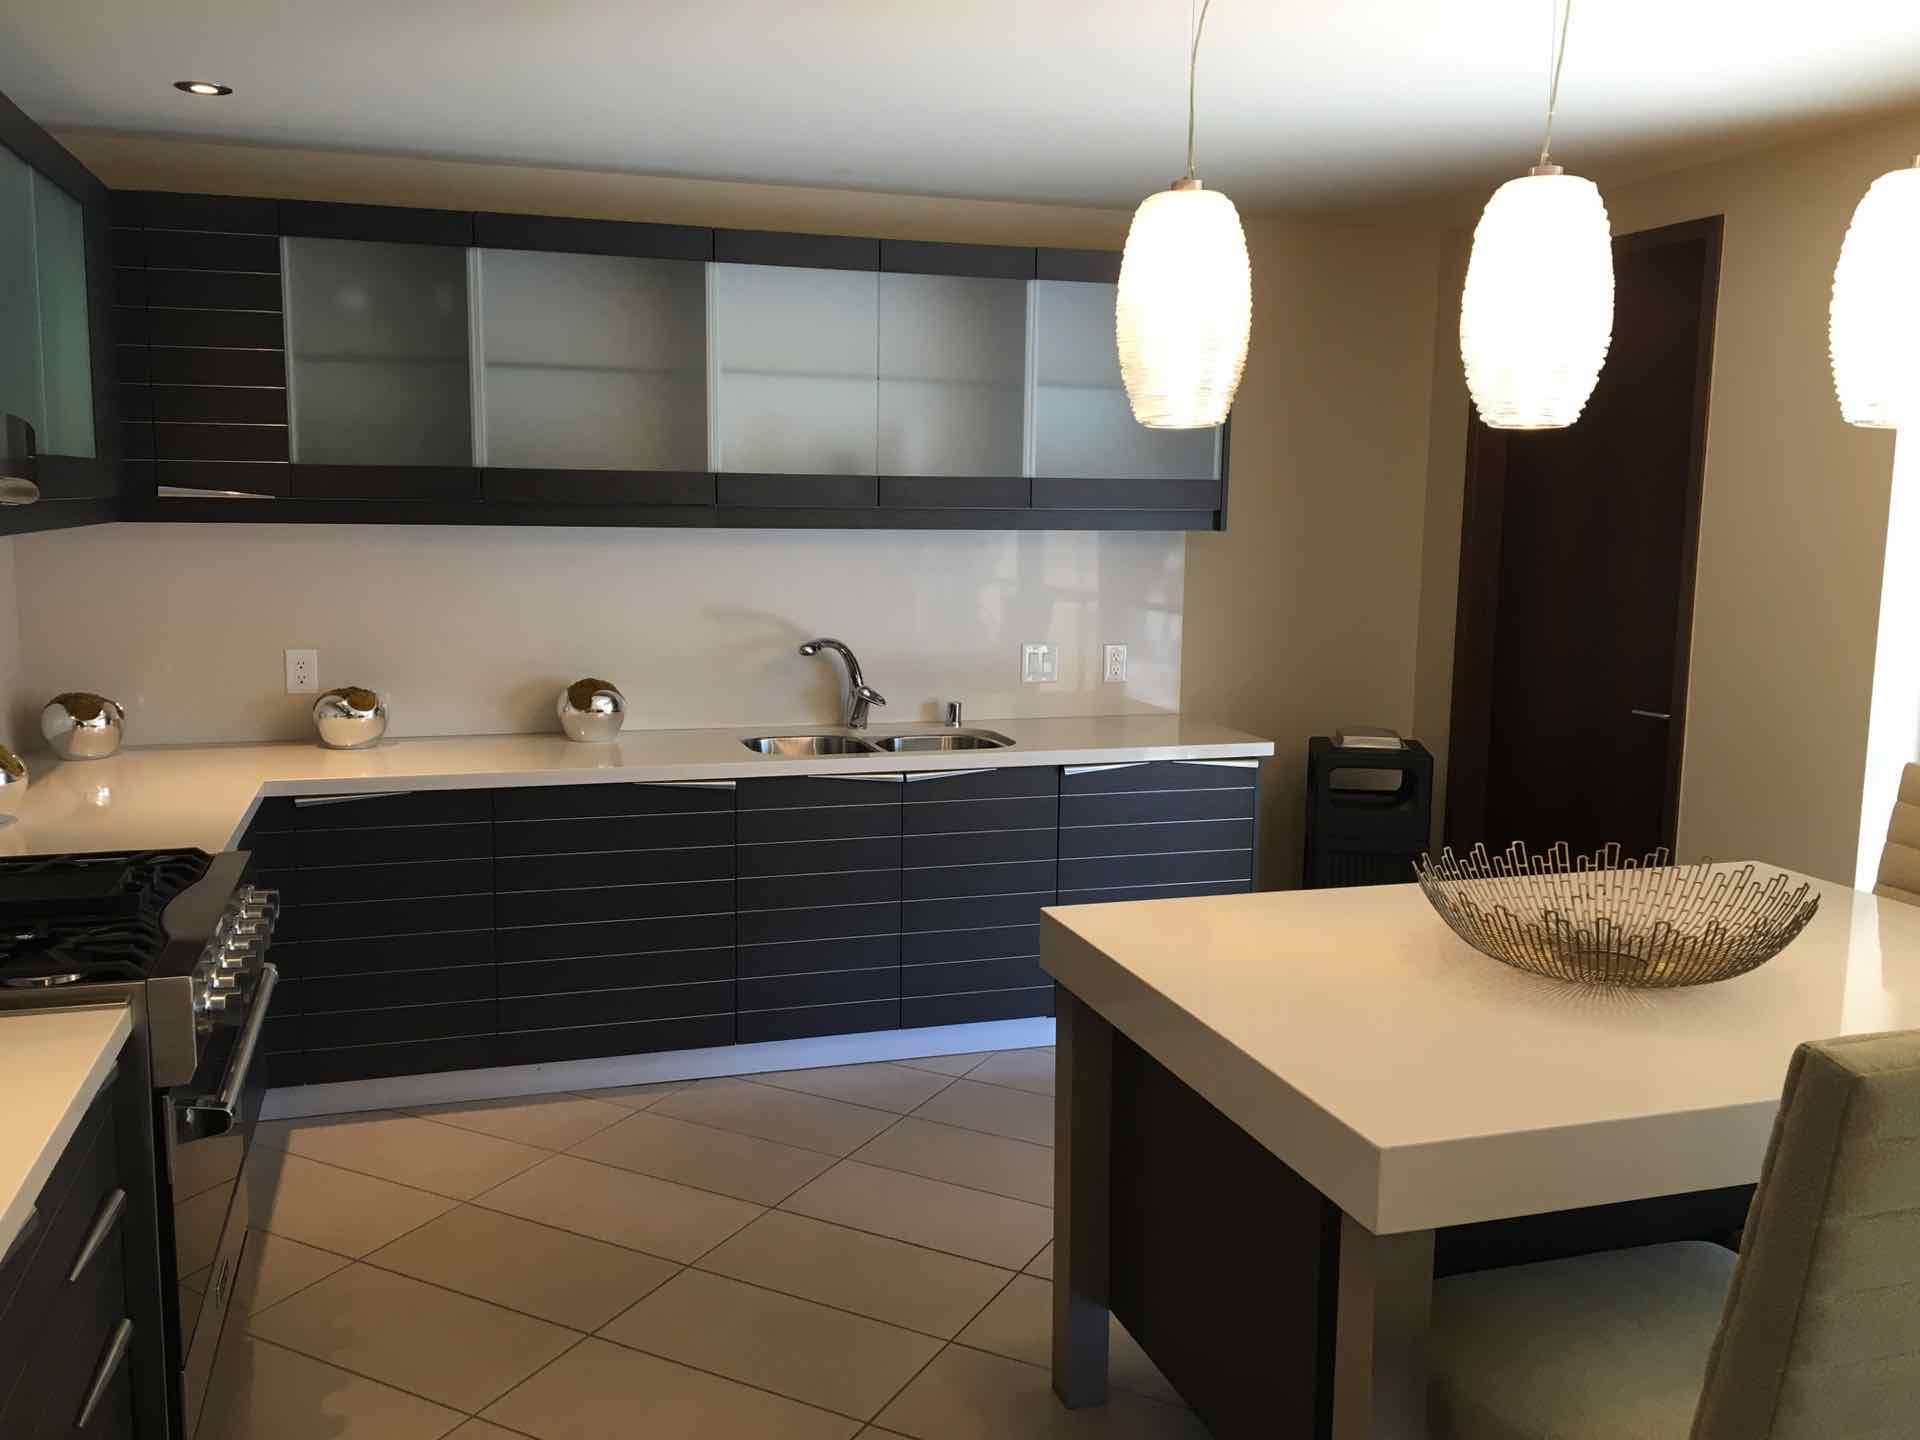 Community Lounge kitchen area of luxury condominium tower